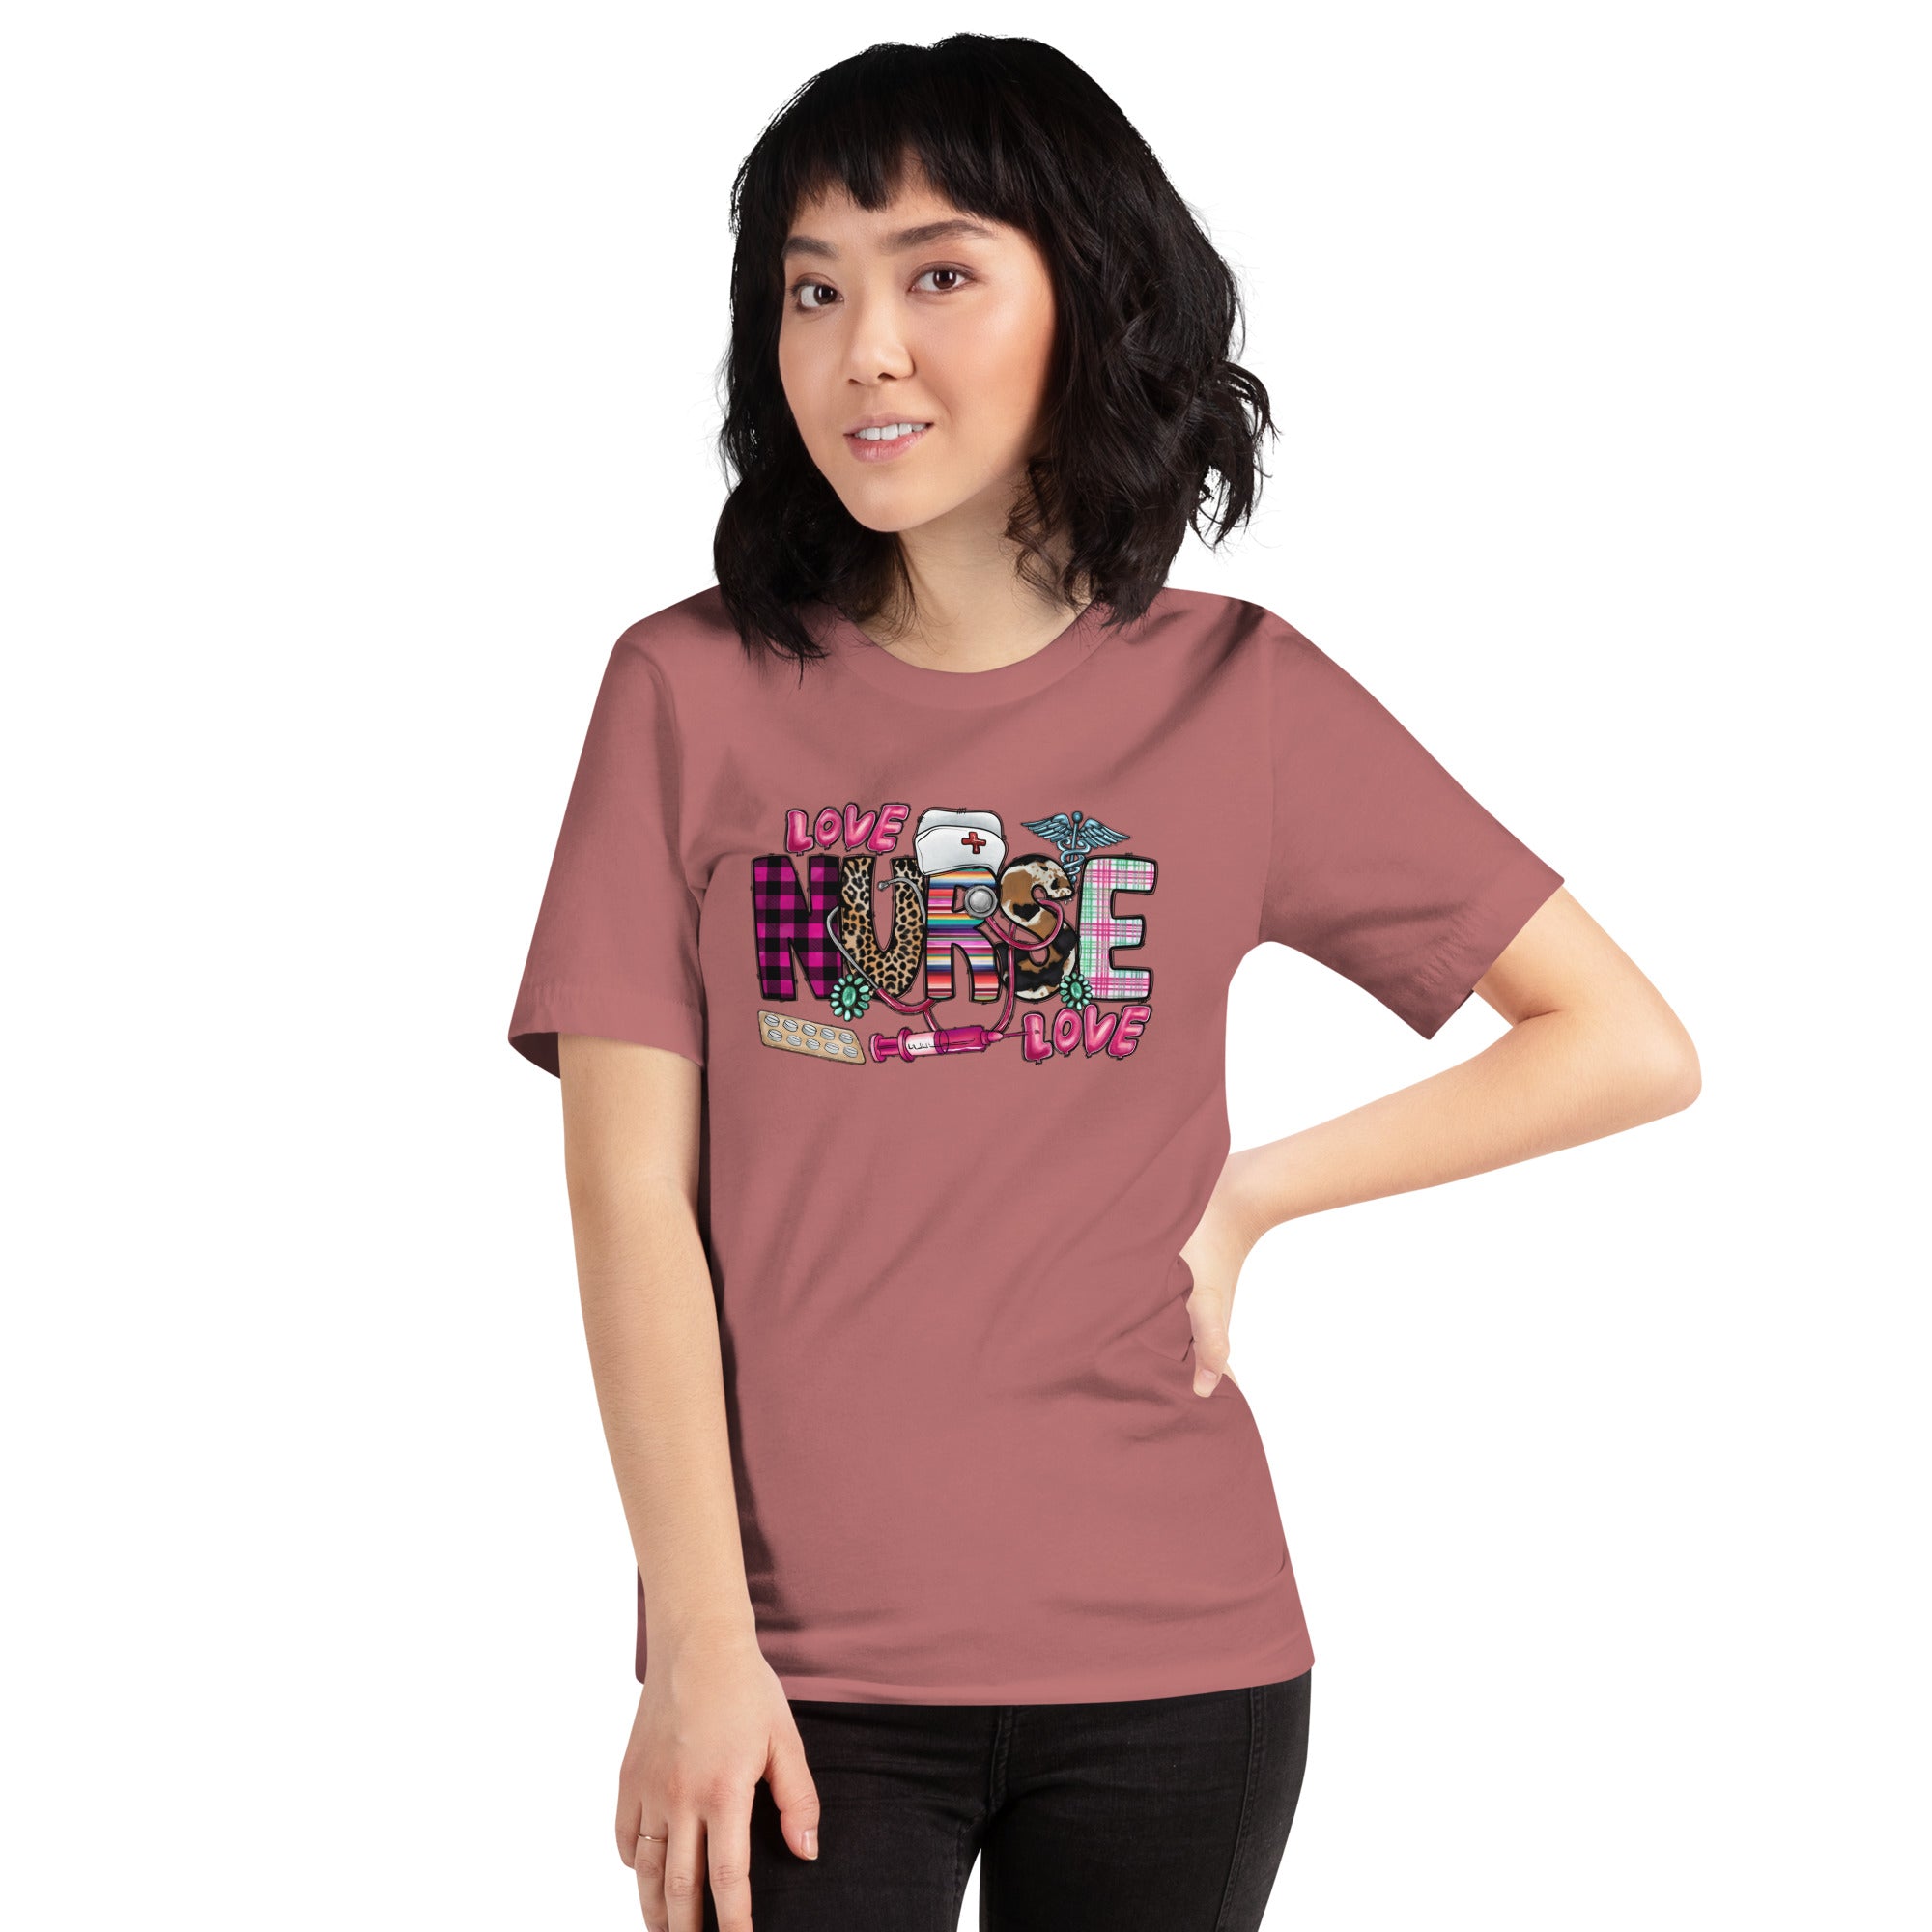 Women's Graphic Short-Sleeve t-shirt